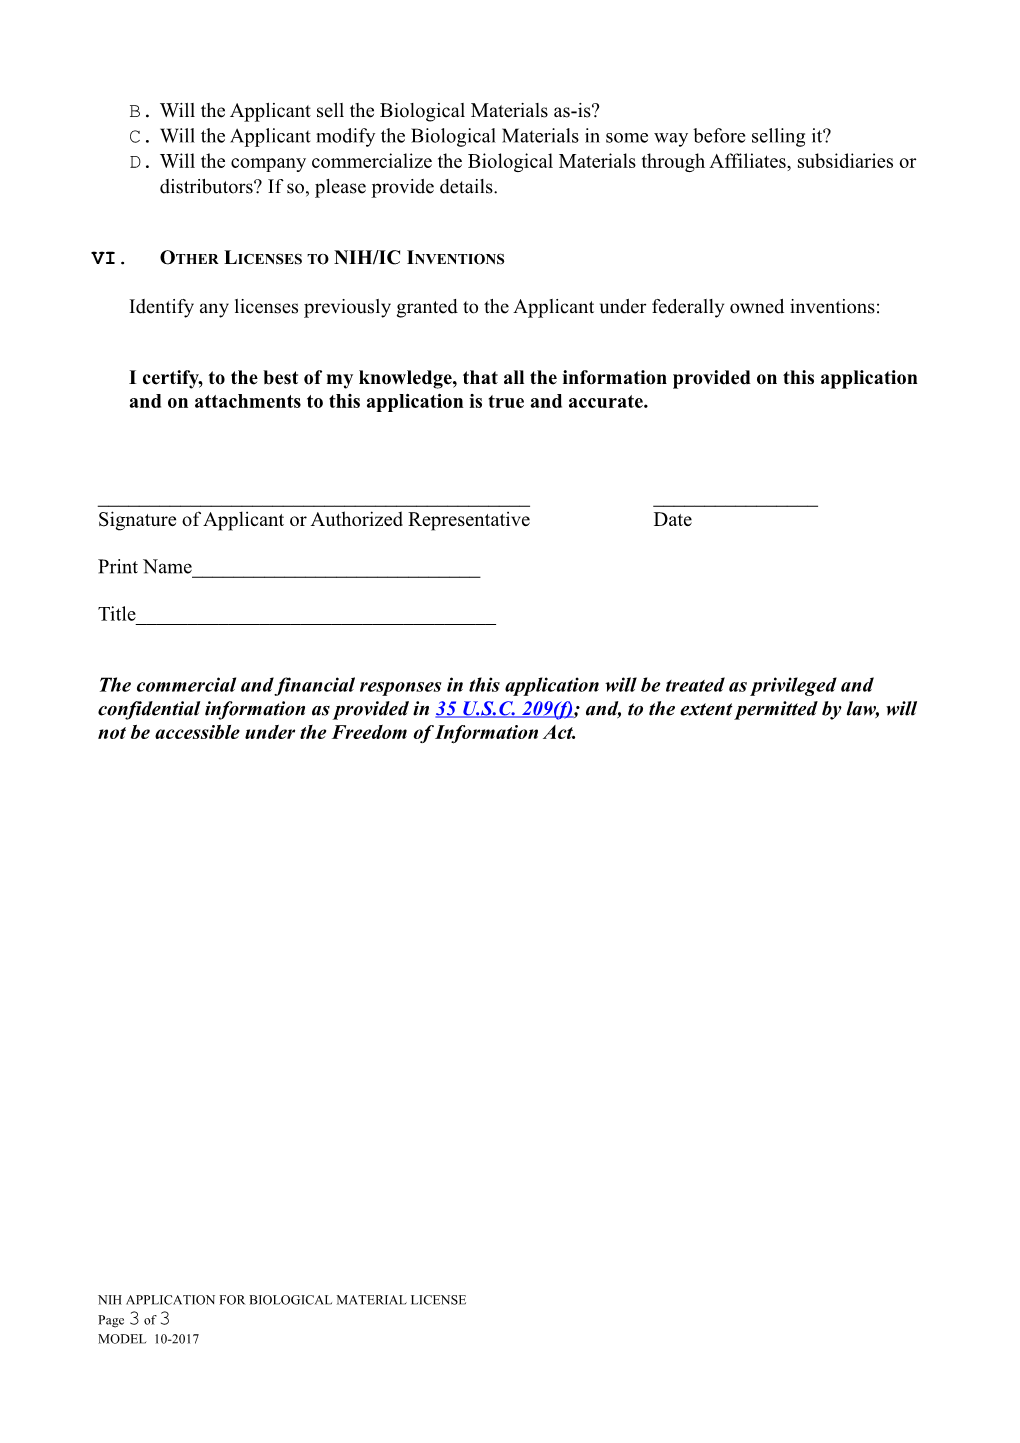 NIH Application for License